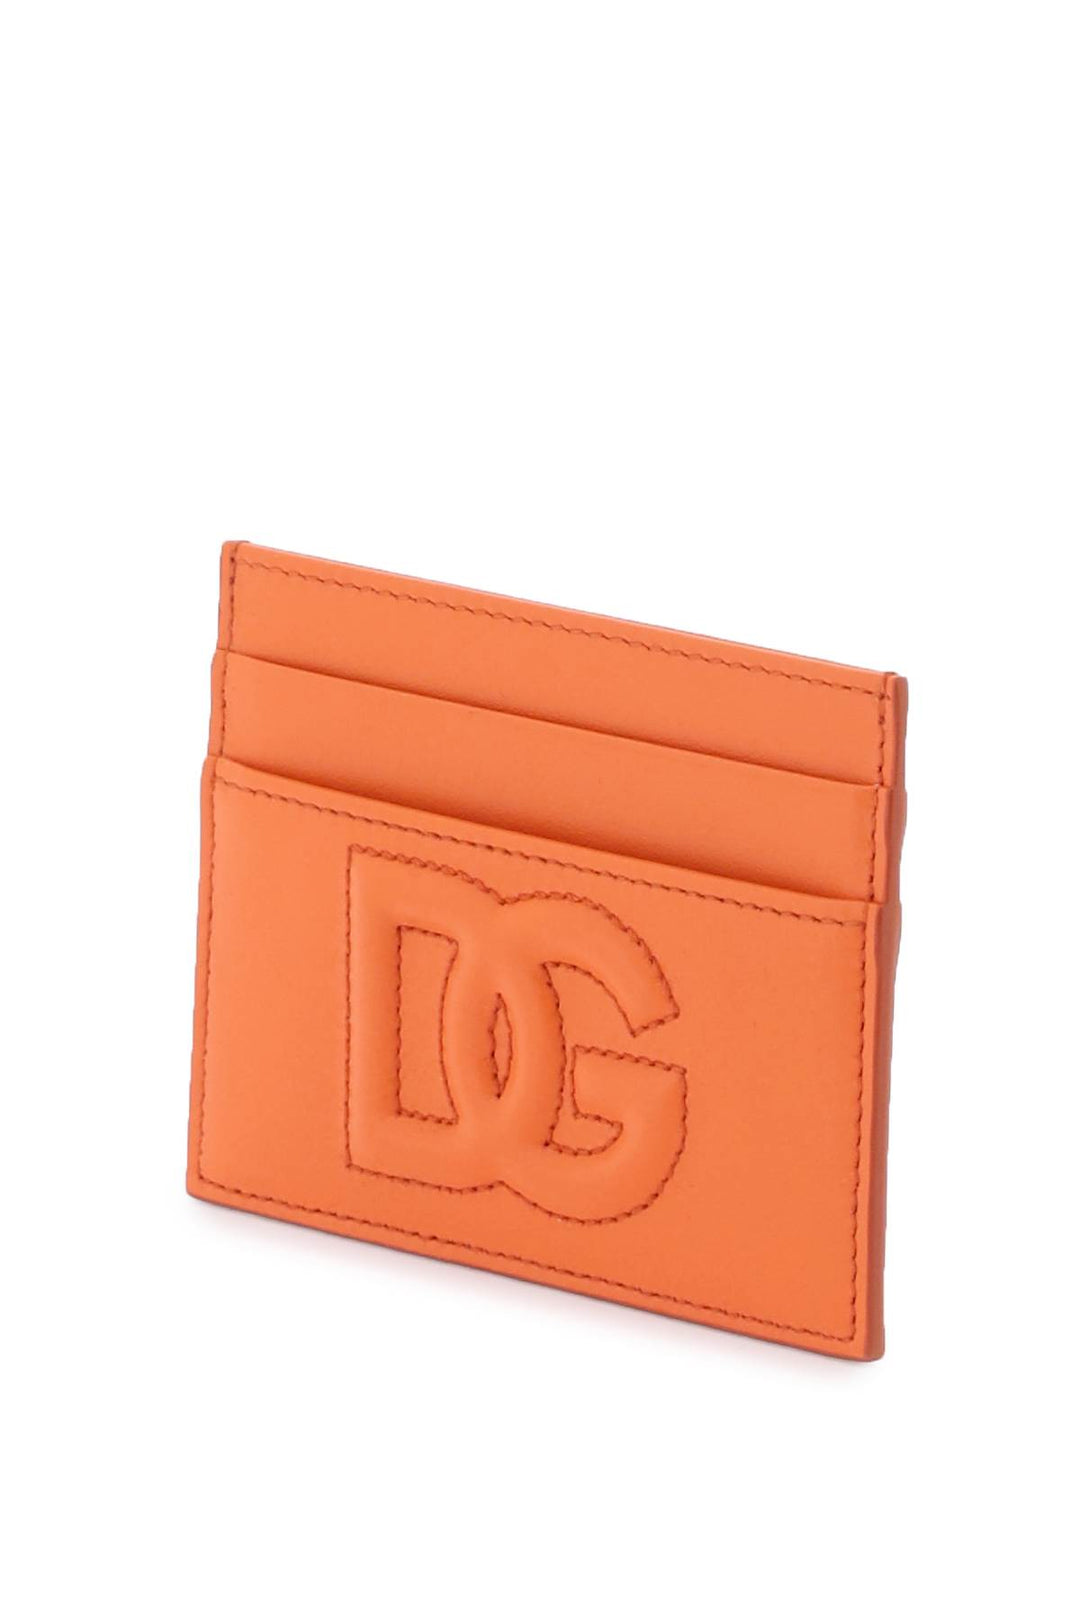 Porta Carte Con Logo - Dolce & Gabbana - Donna